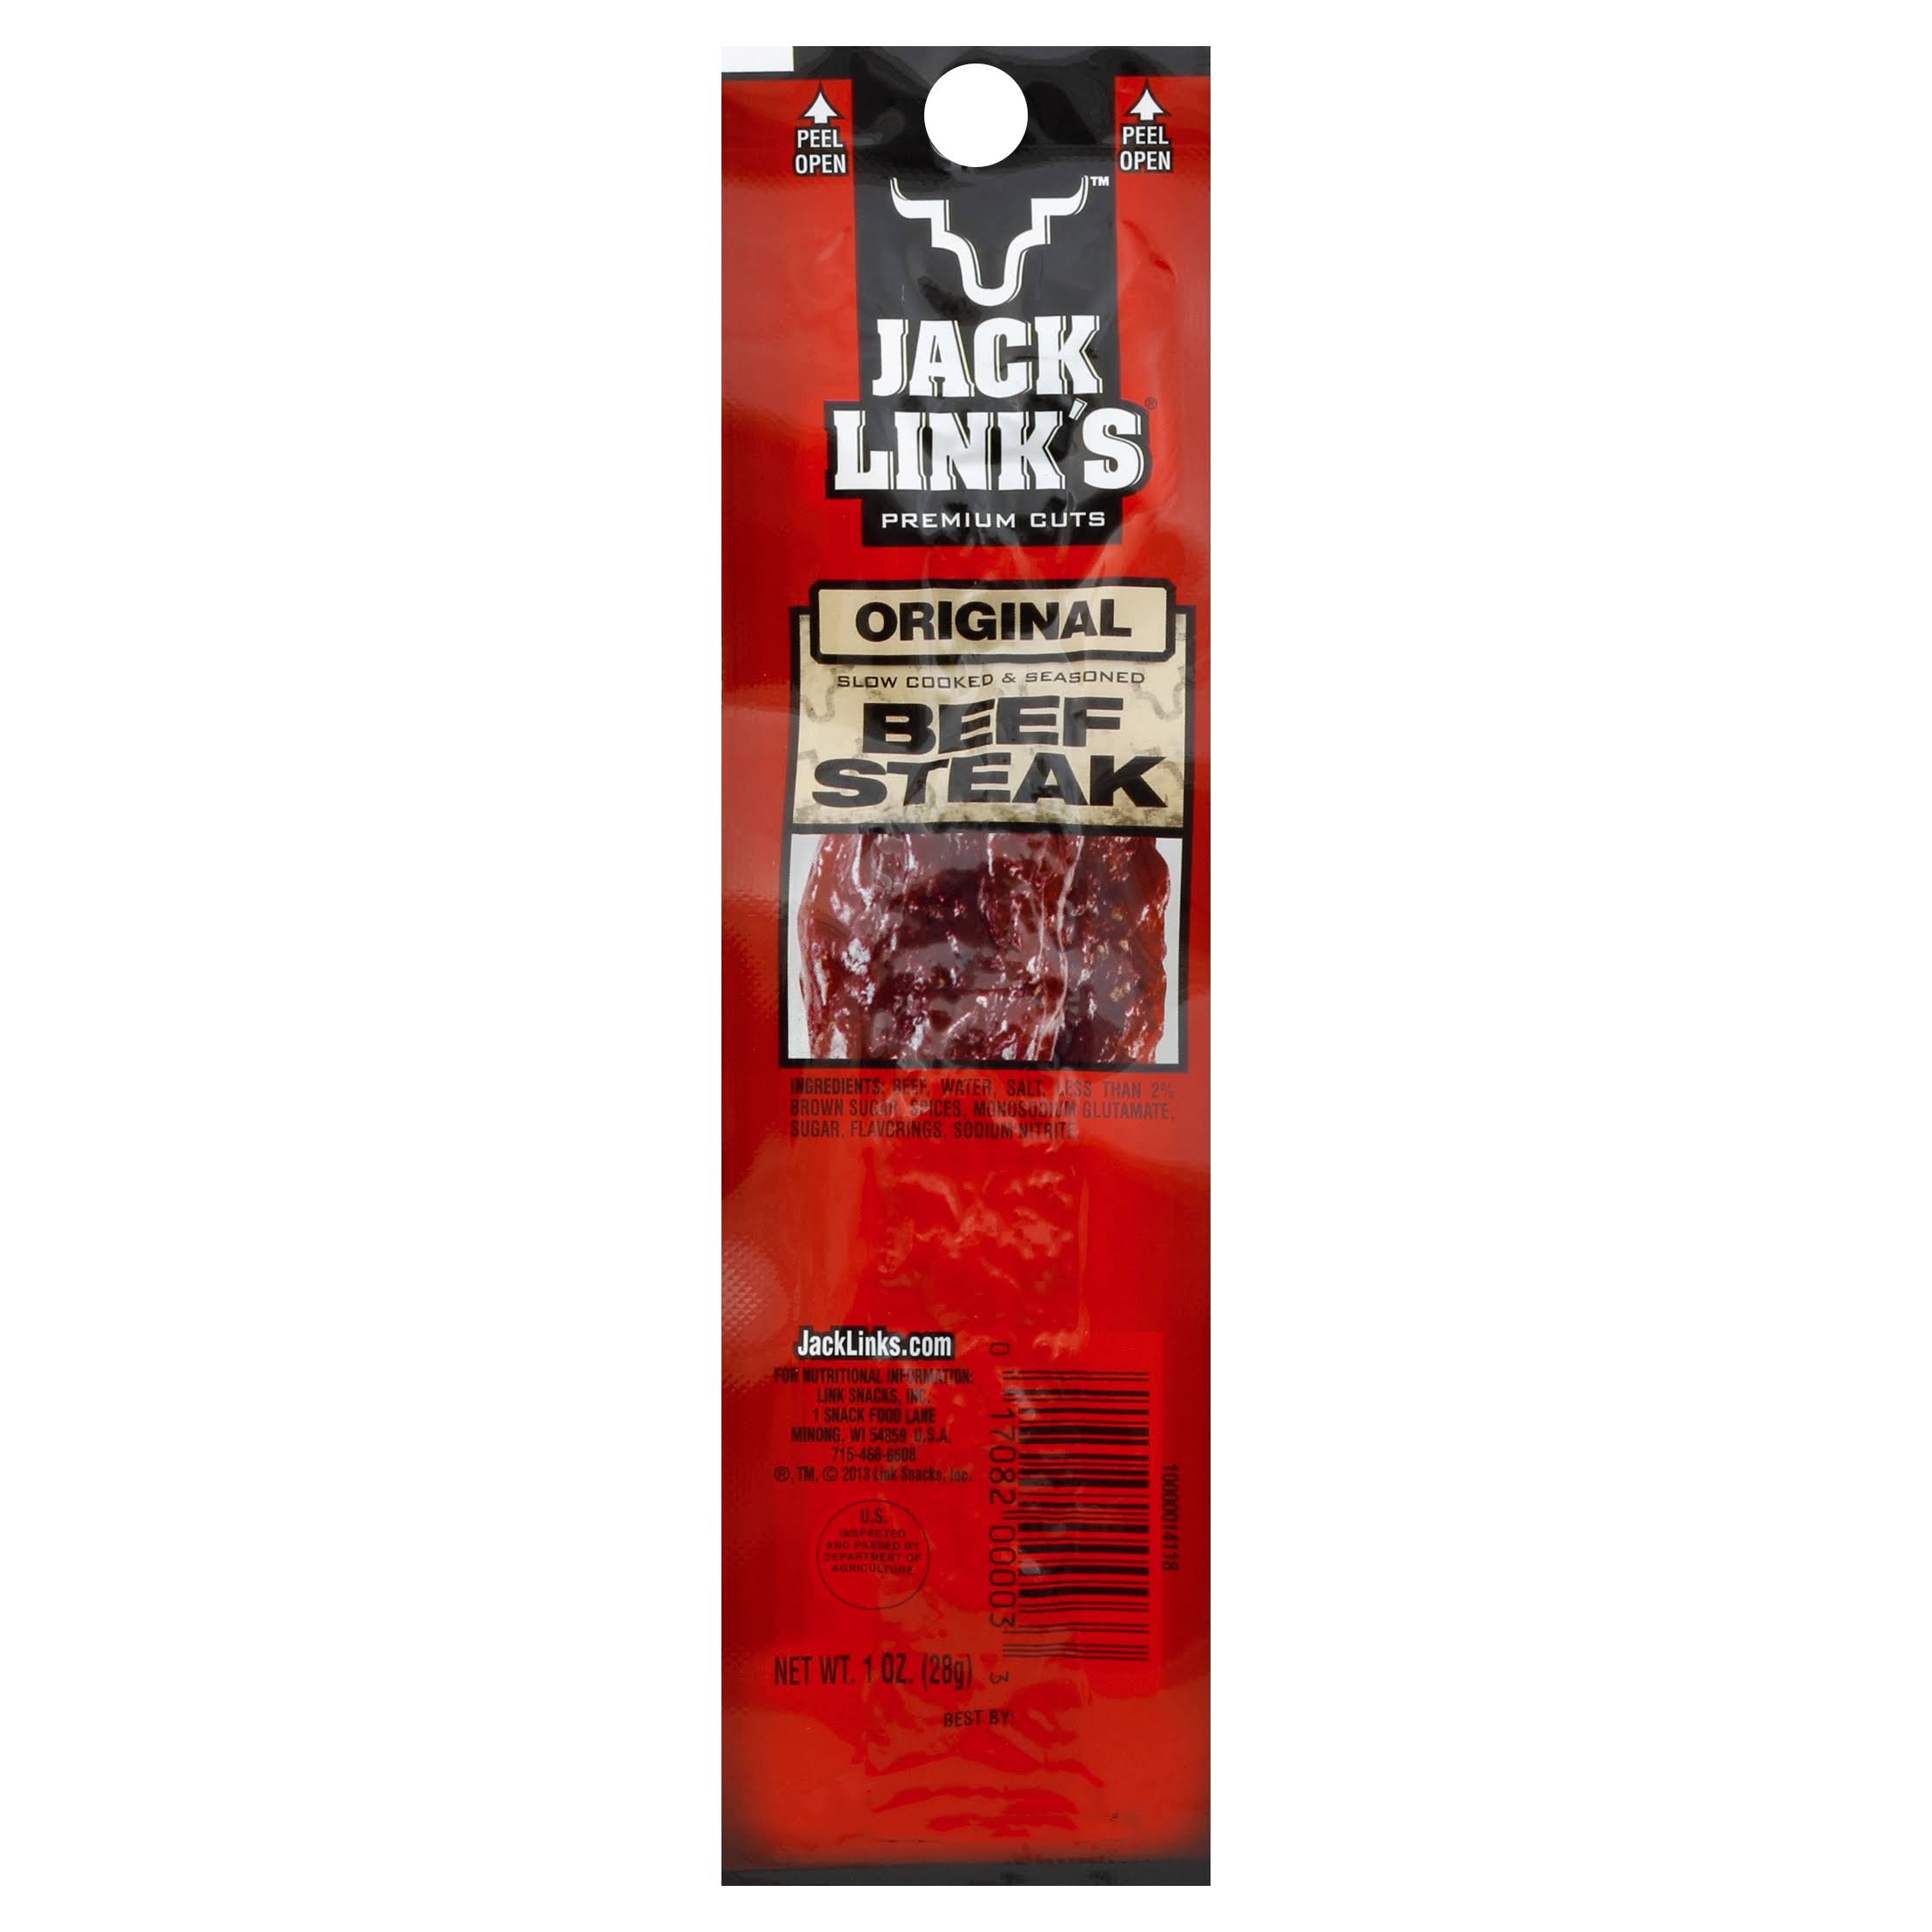 Jack Link's Original Beef Steak